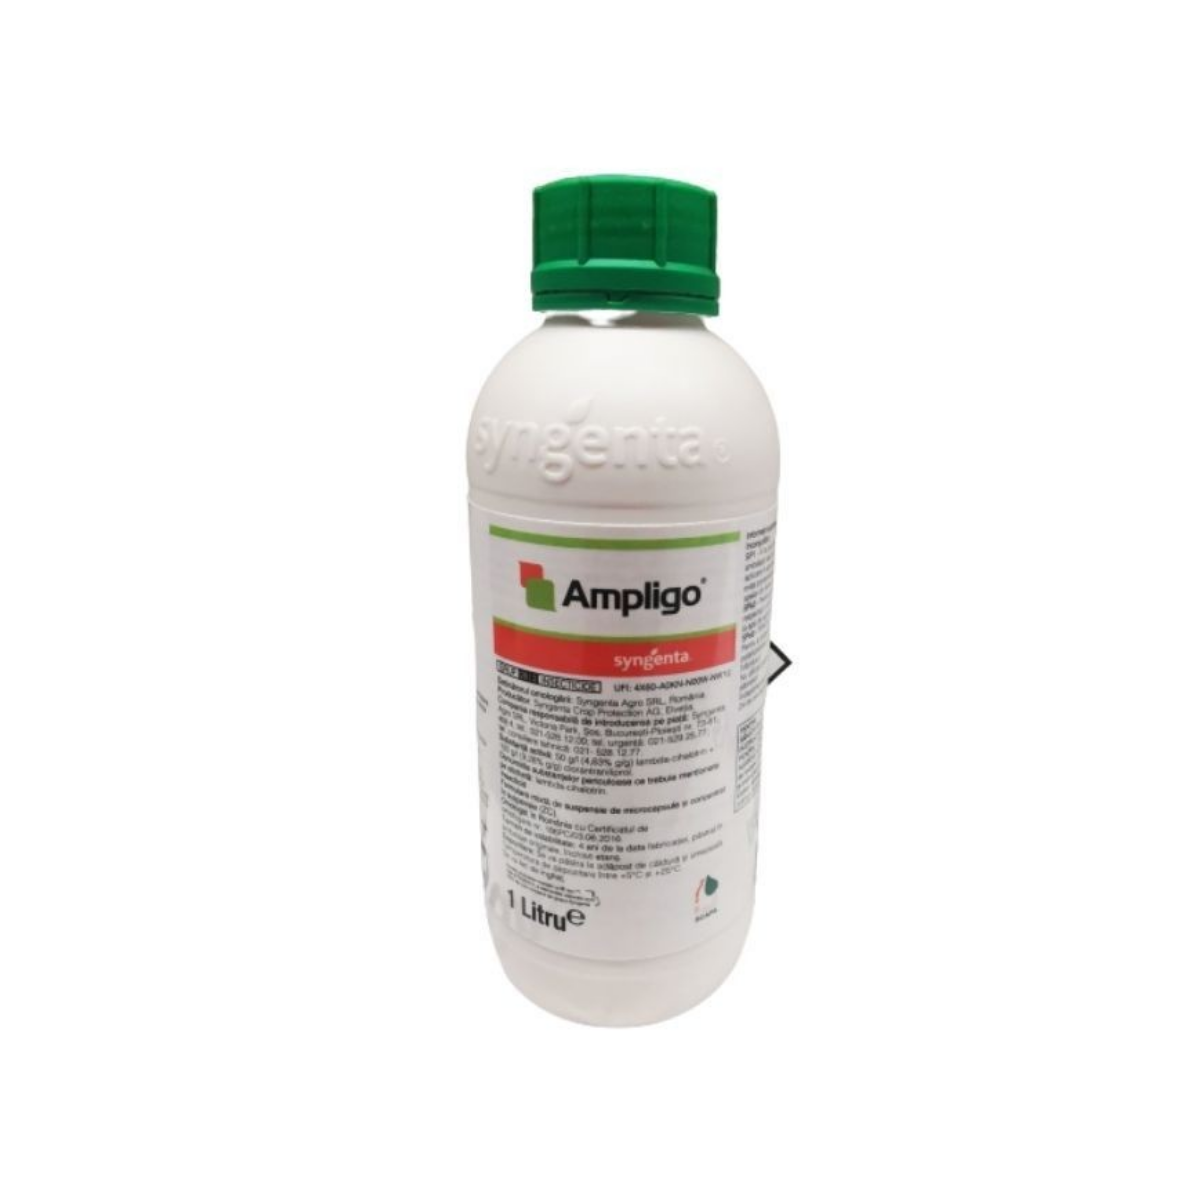 Insecticide - Insecticid porumb si legume Ampligo, 1 L, hectarul.ro